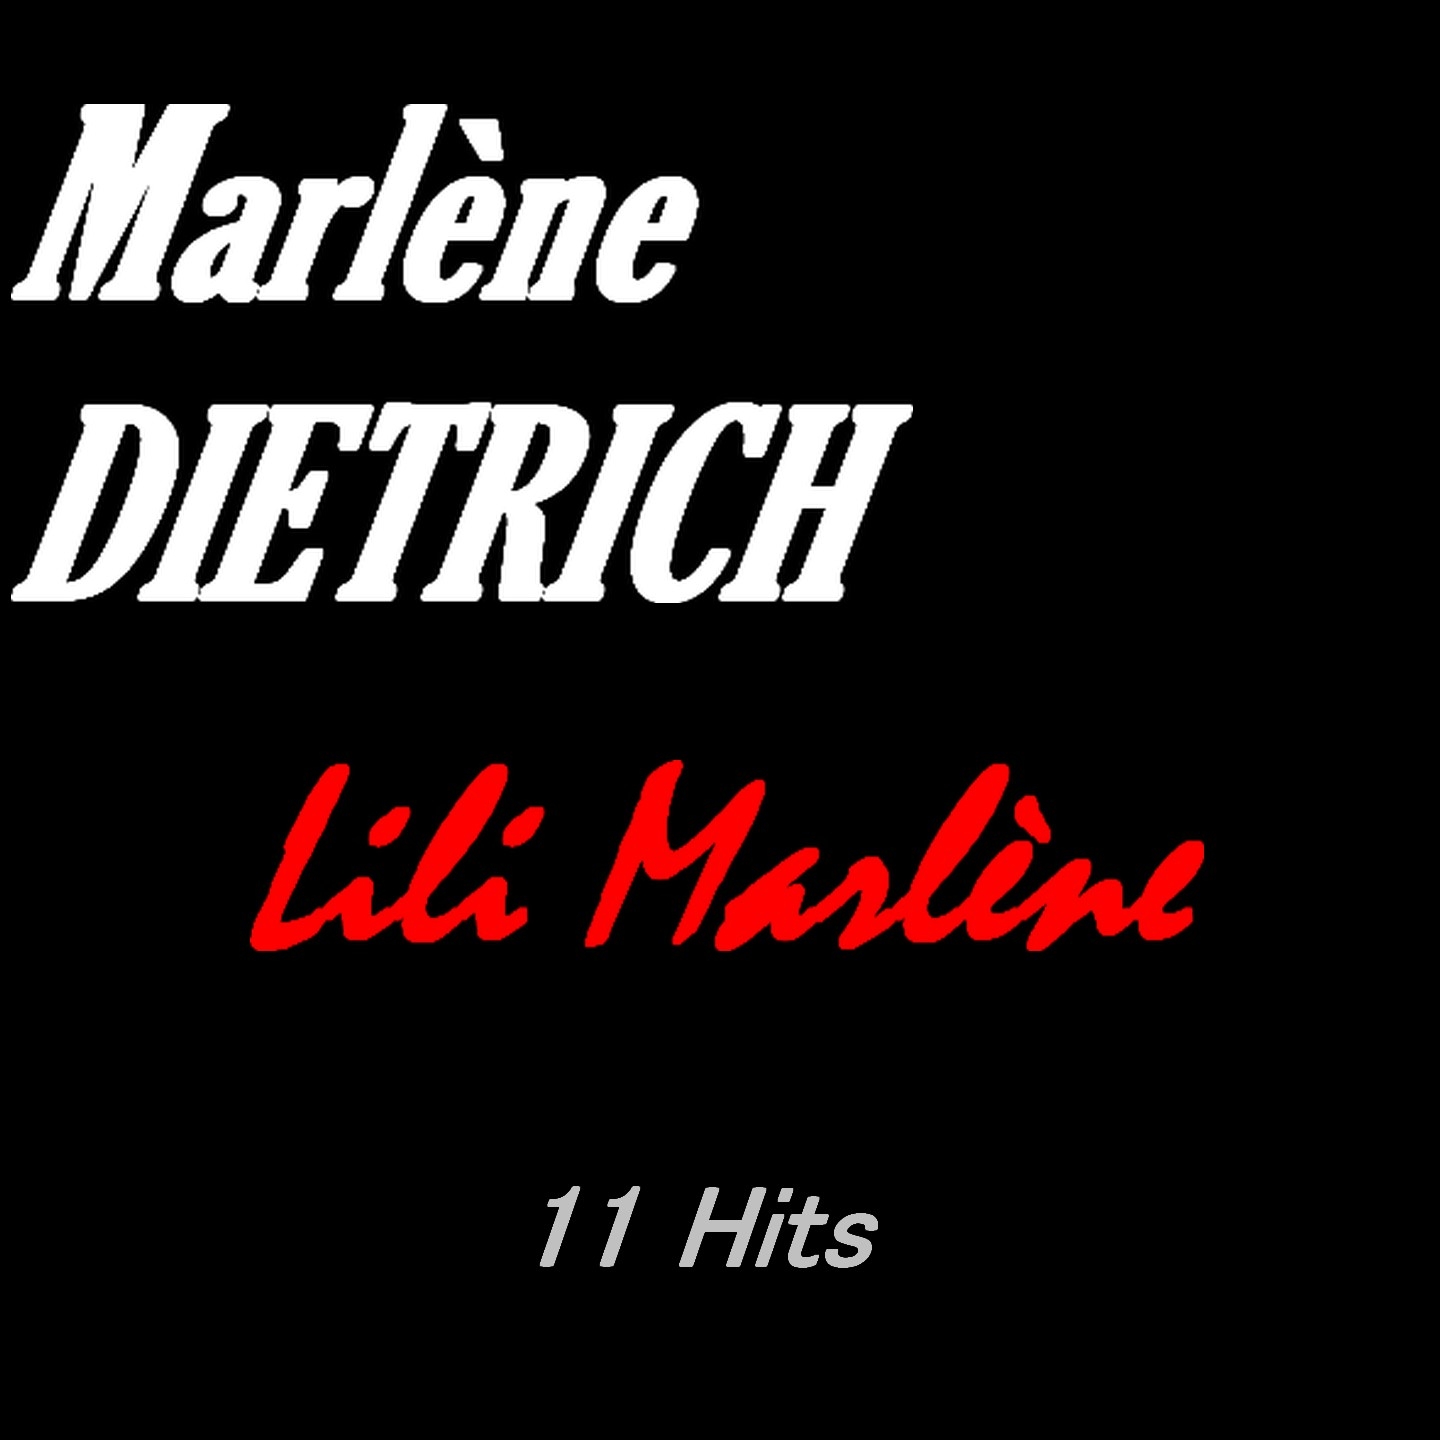 Lili Marle ne